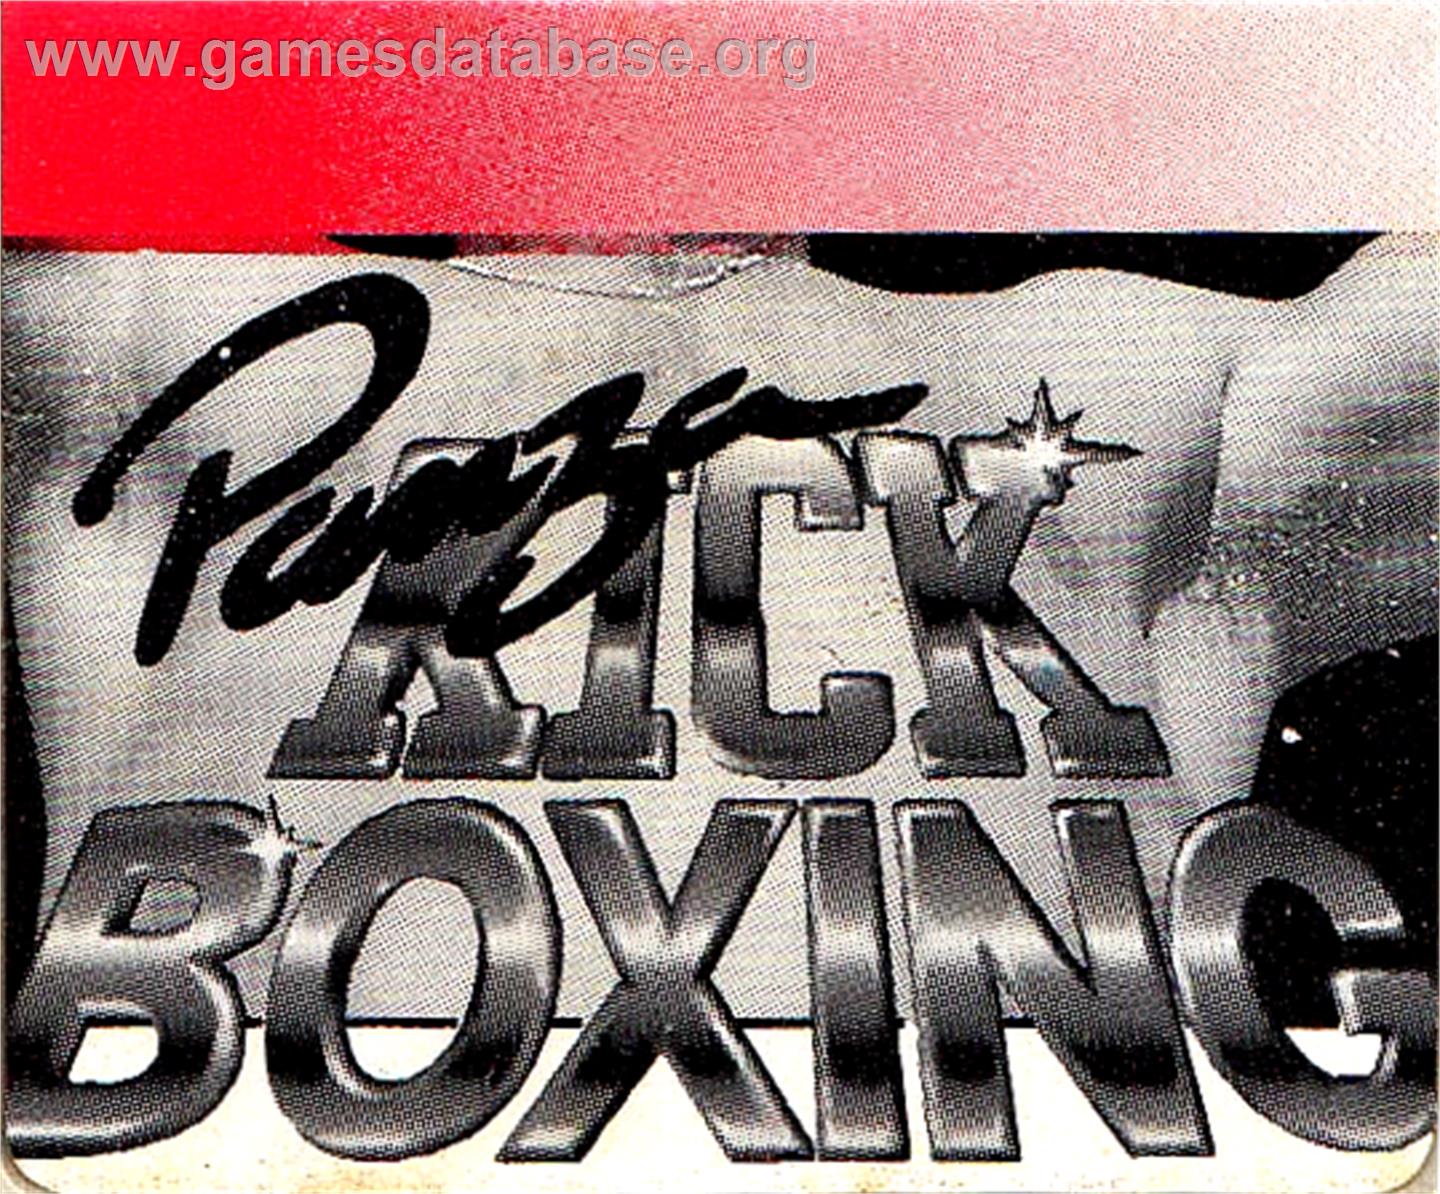 Panza Kickboxing - Amstrad GX4000 - Artwork - Cartridge Top